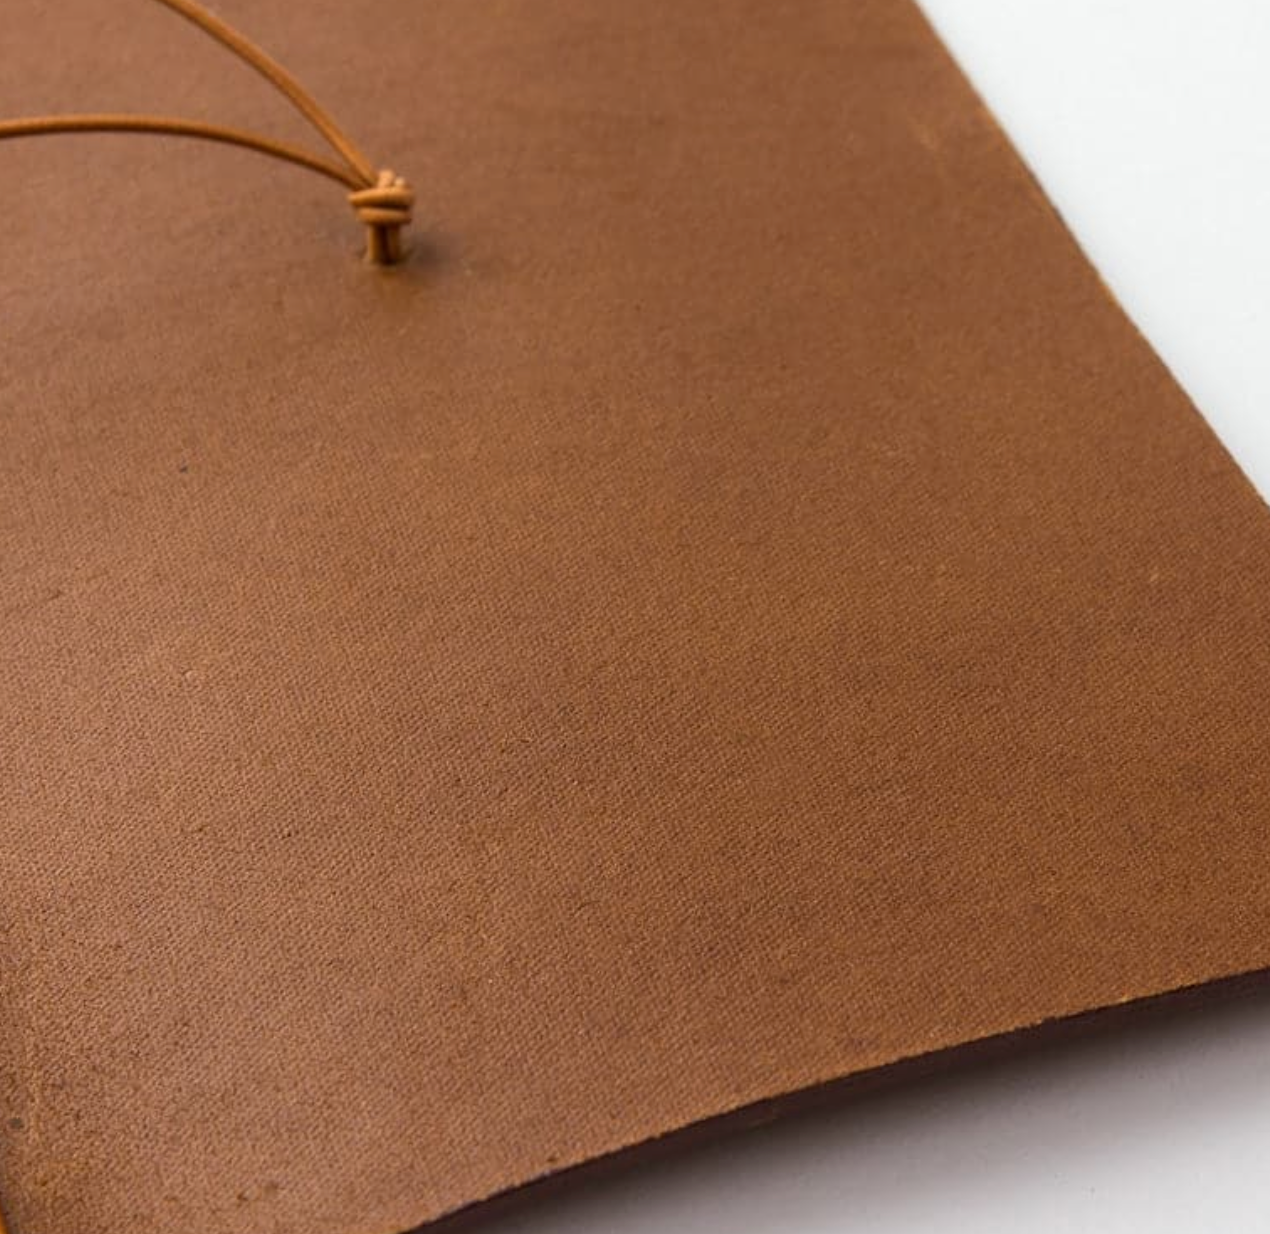 Traveler's Company Leather Notebook Camel Passport Size